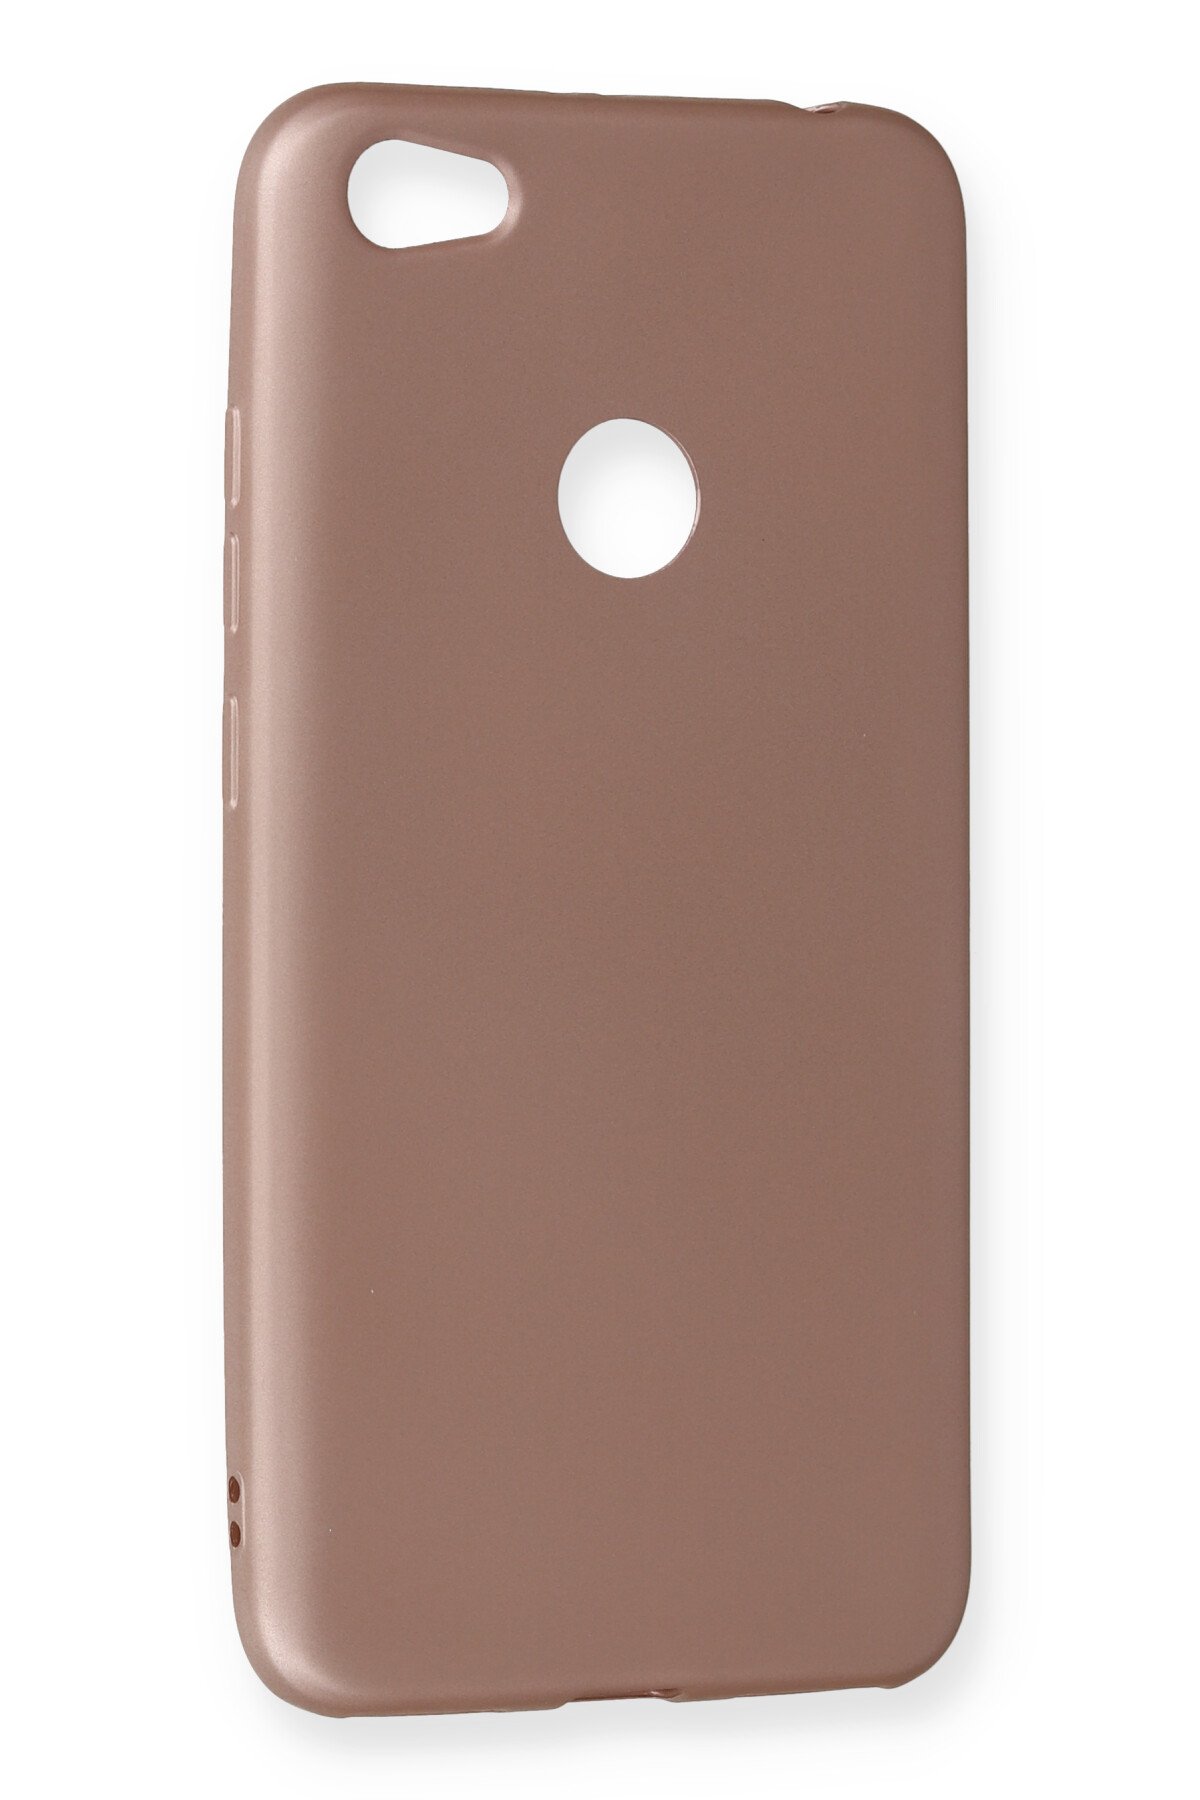 NewFace Newface Xiaomi Redmi Note 5A Prime Kılıf Premium Rubber Silikon - Rose Gold